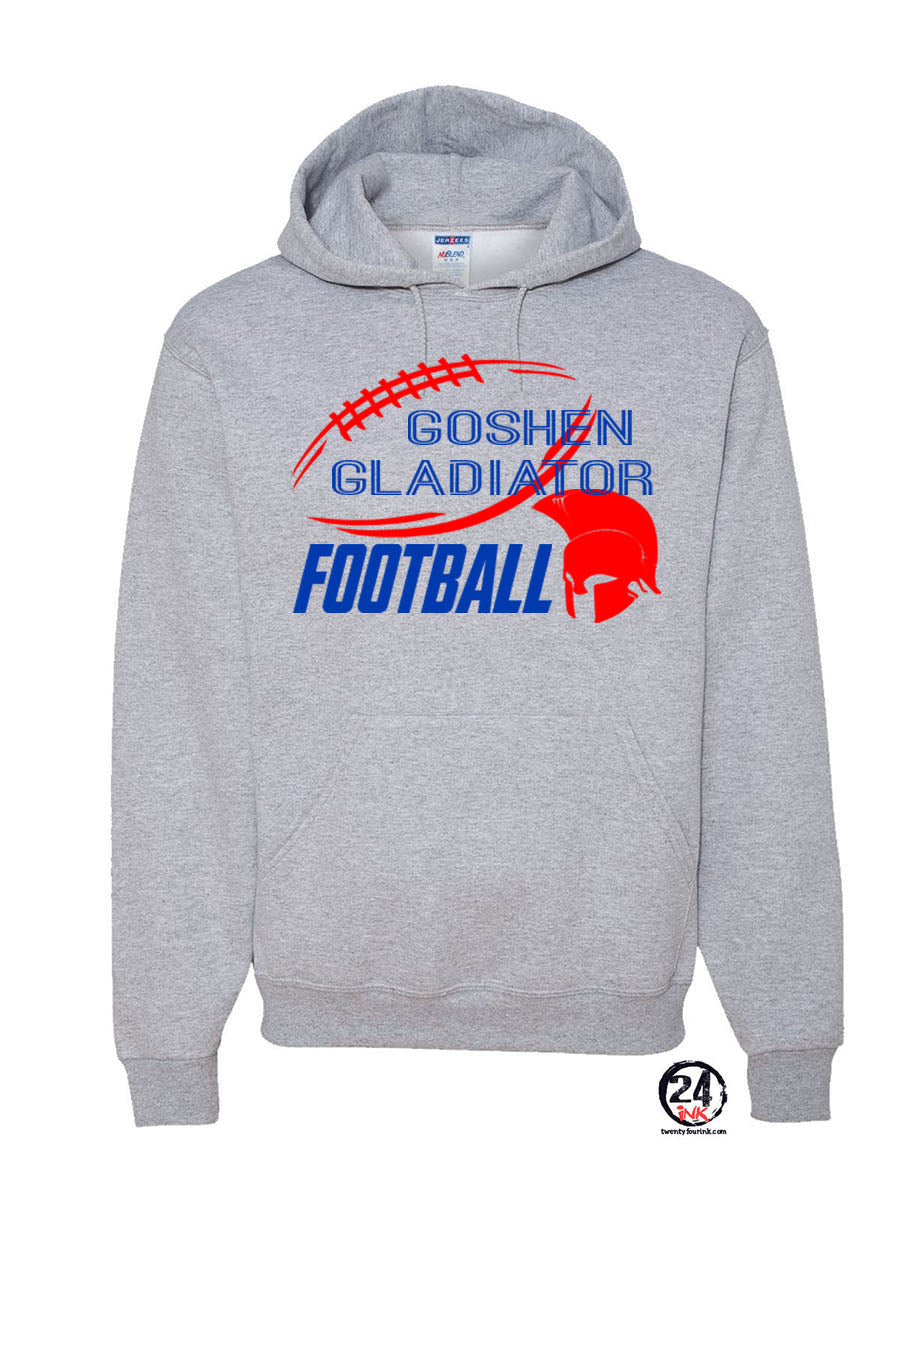 Goshen Football Design 6 Hooded Sweatshirt